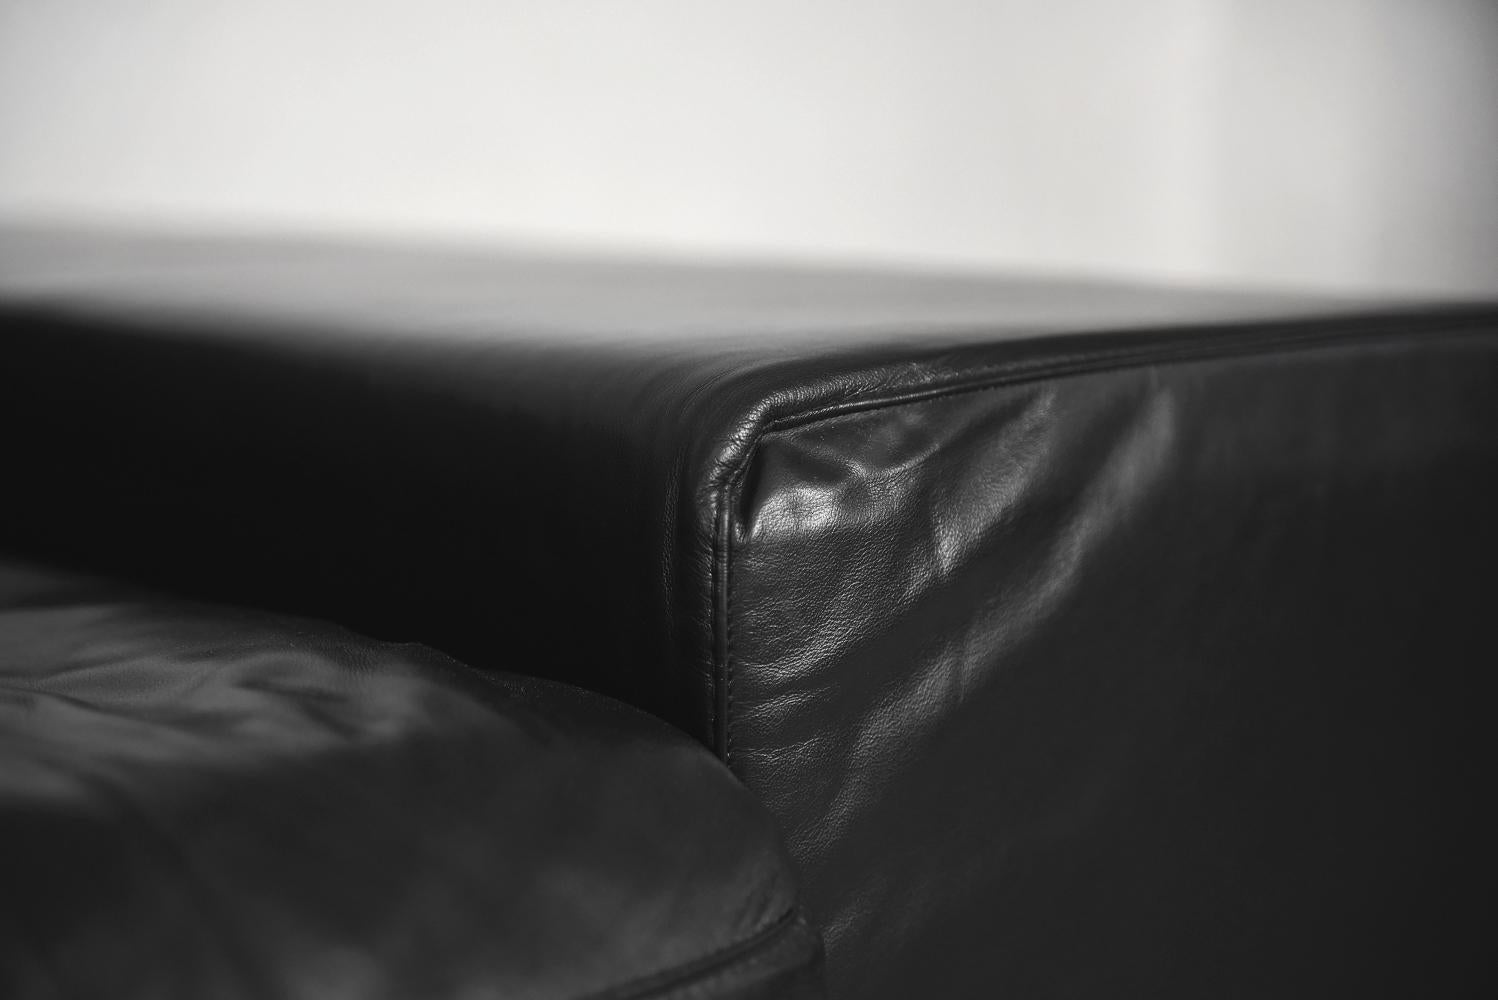 Vintage Elegant Minimalist Black Leather Sofa by Natuzzi Design Center  For Sale 6